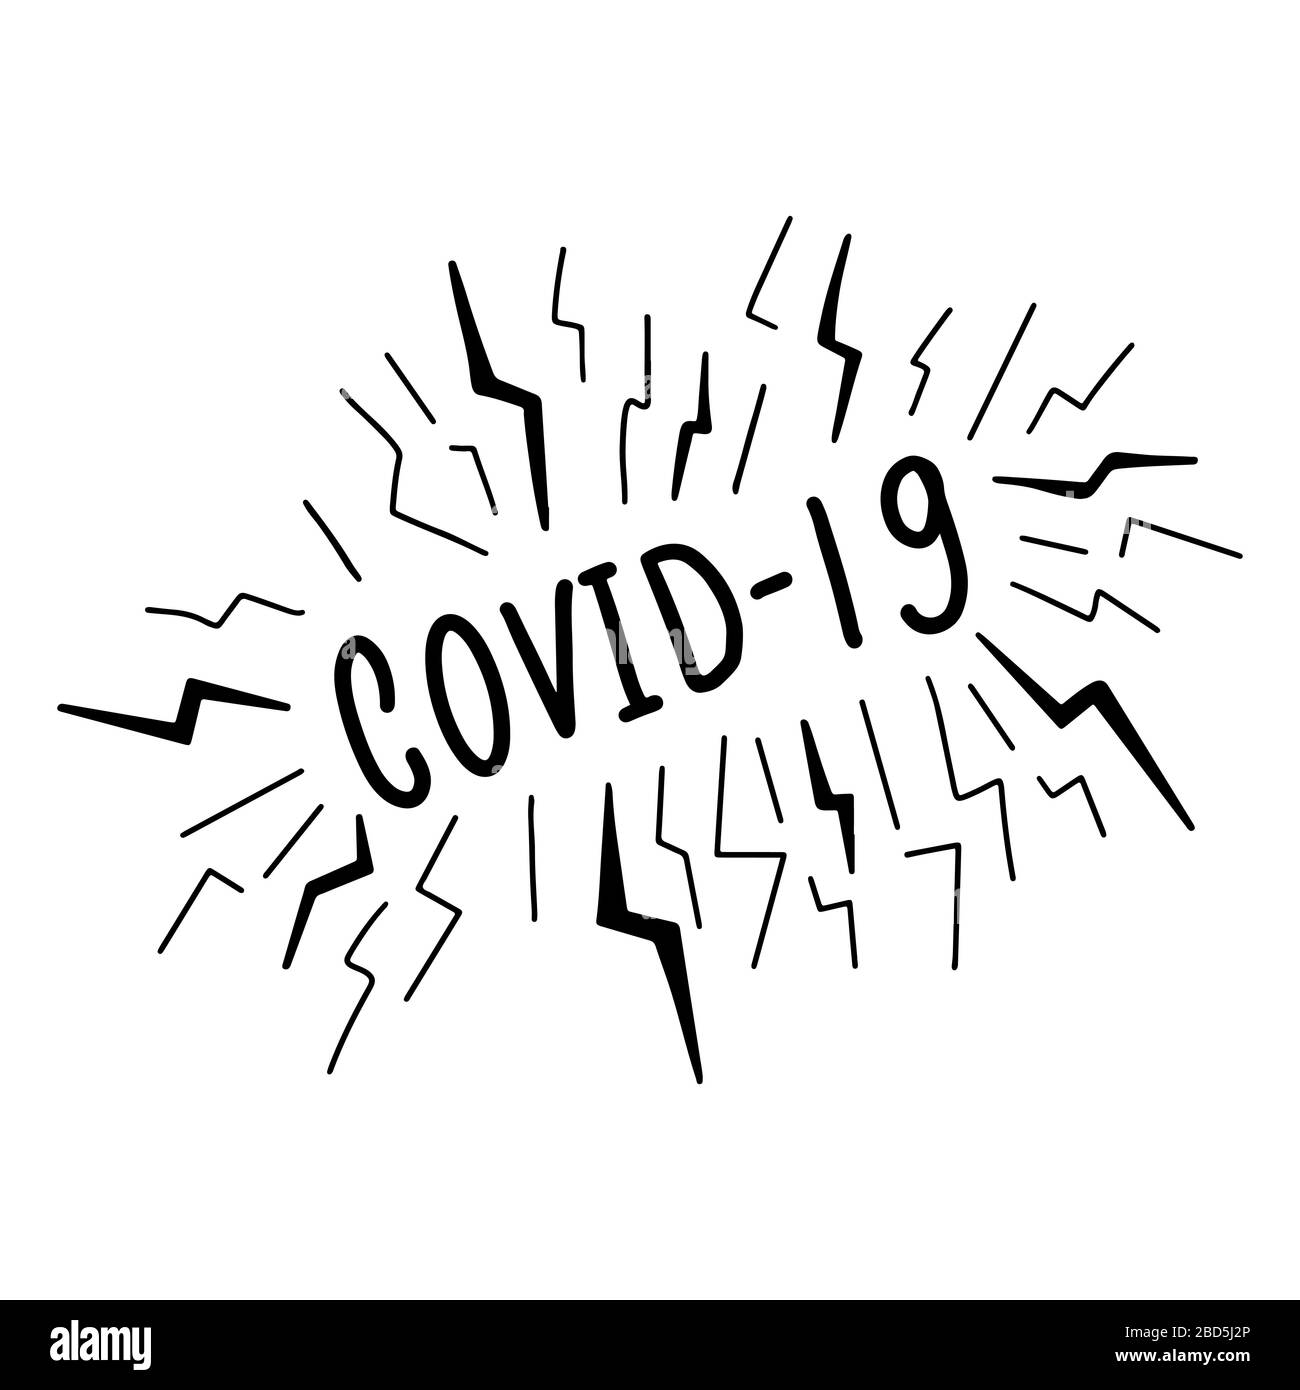 Covid-19-Vektorgrafiken. Grafikkonzept für Coronavirus Pandemie. Covid-19-Virus-Vektor-Text. 2019-nCoV. Stock Vektor